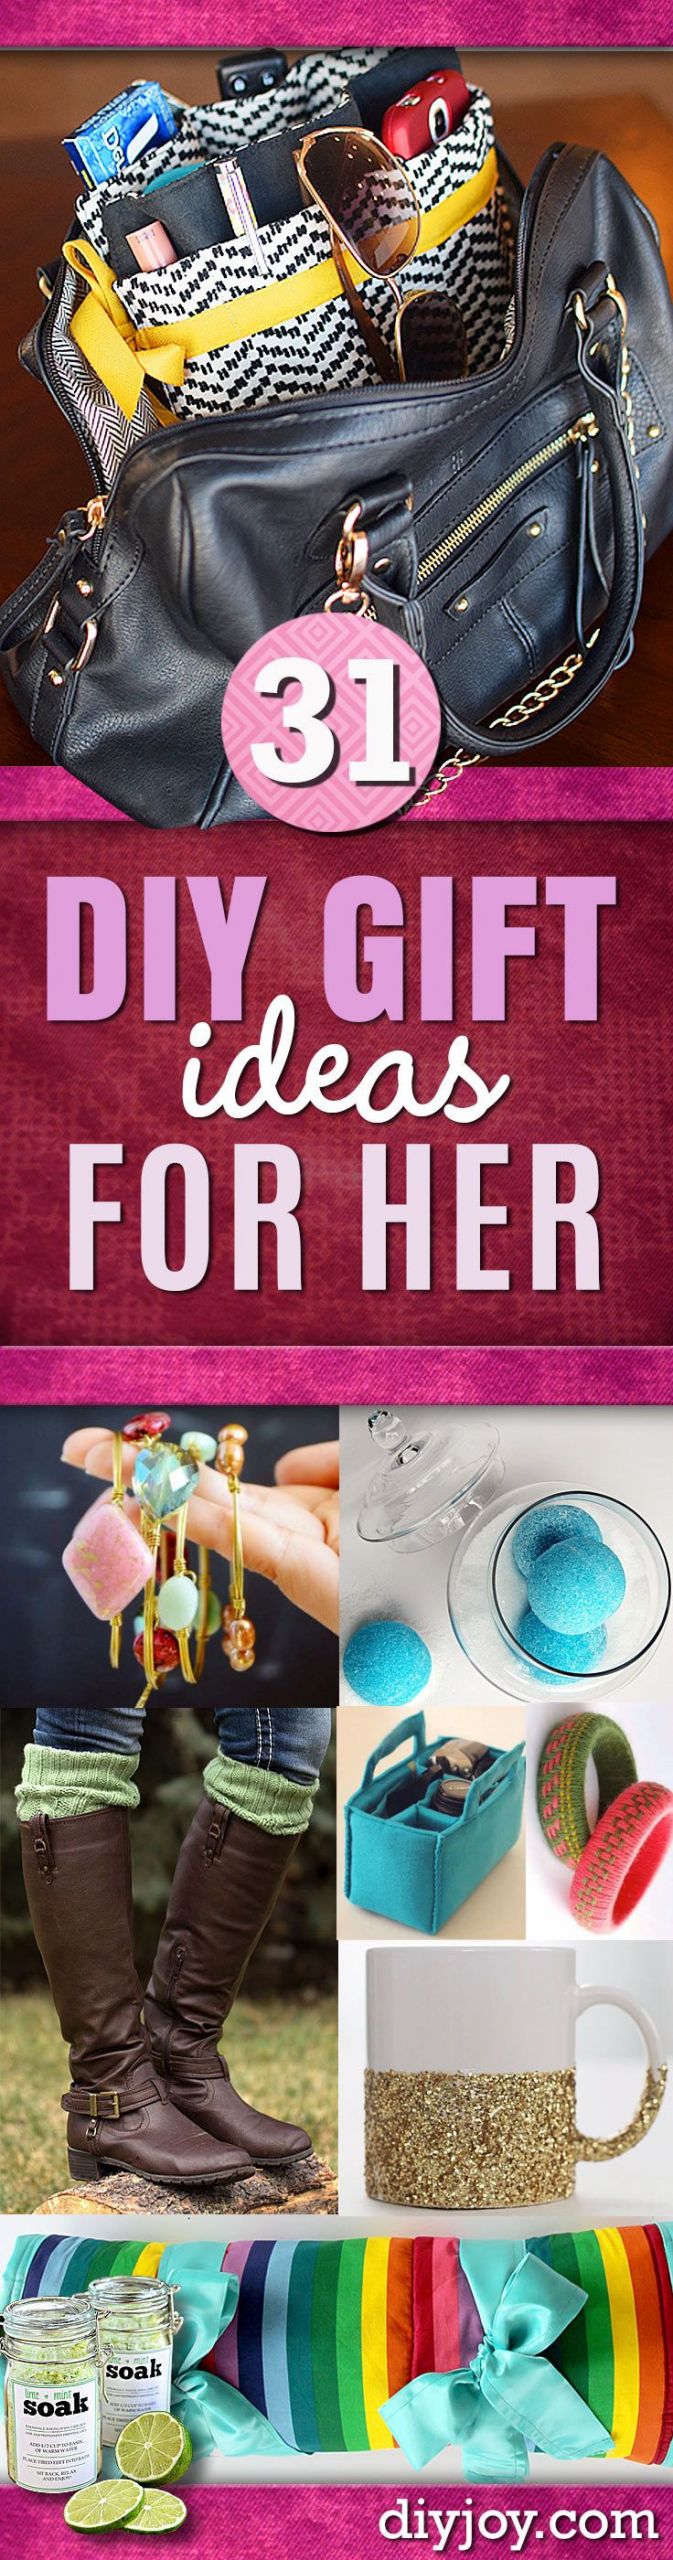 Christmas Gift Ideas For Girlfriend Pinterest
 Super Special DIY Gift Ideas for Her DIY JOY